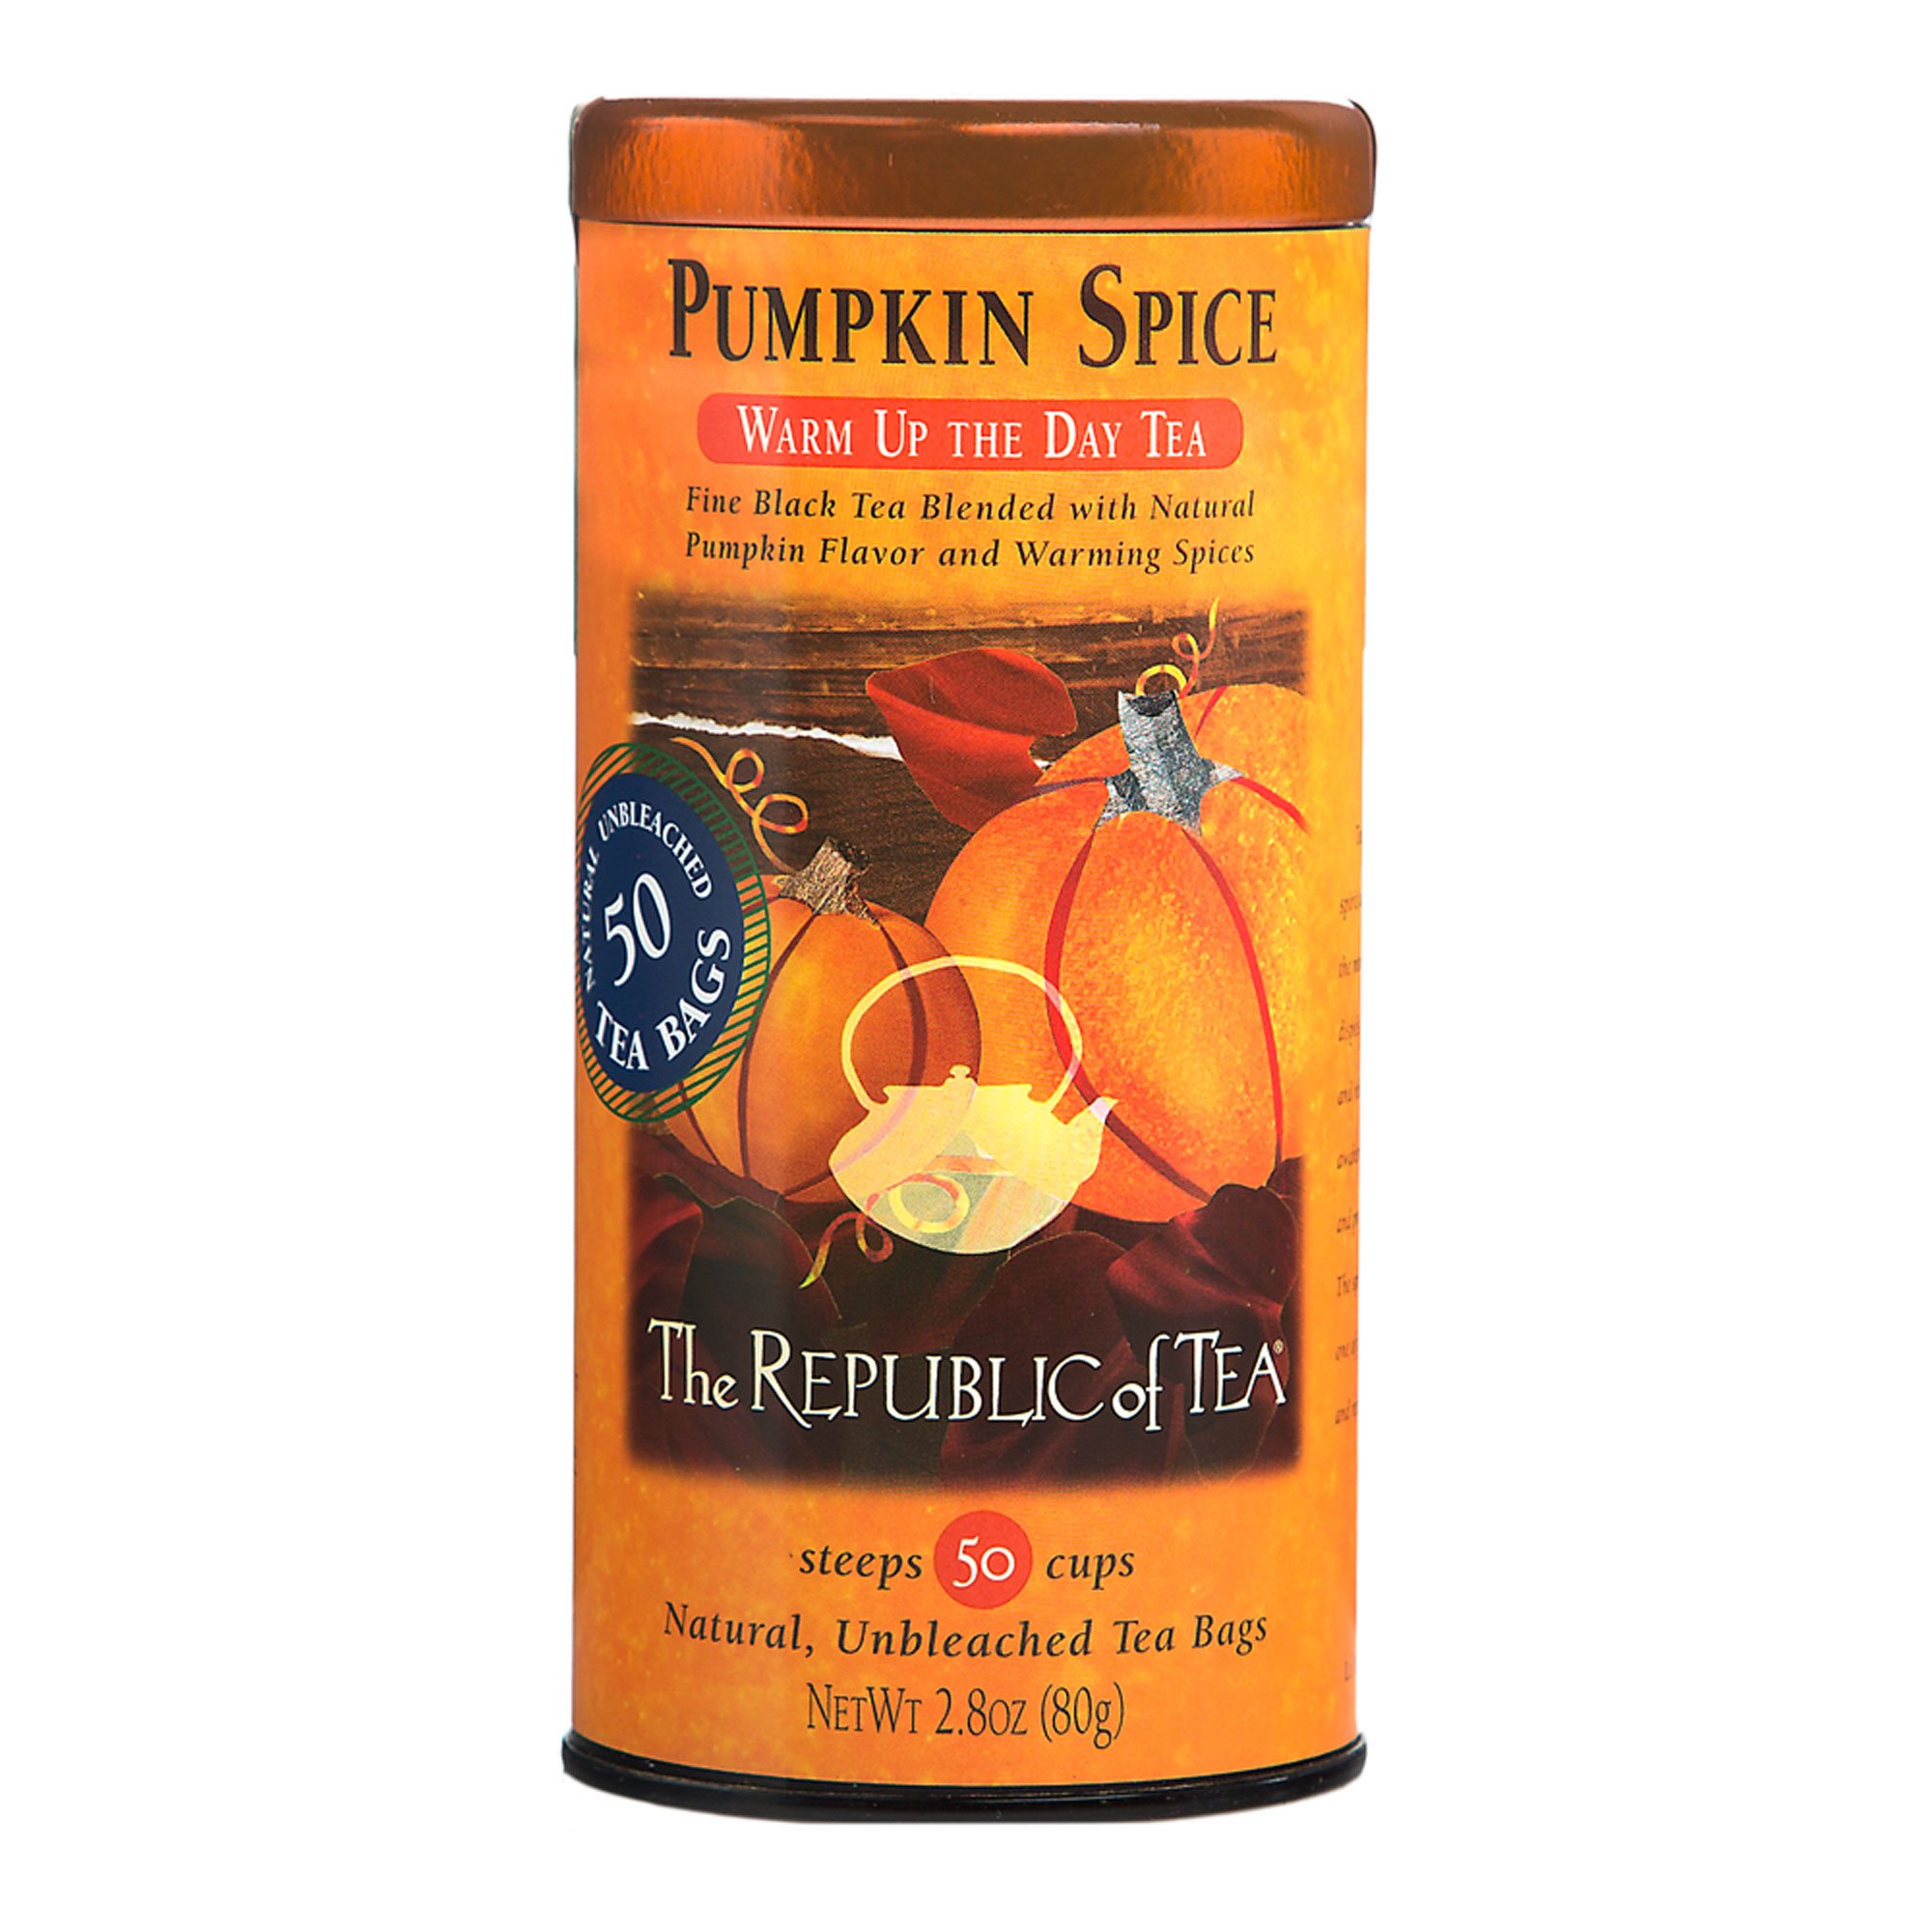 The Republic of Tea Pumpkin Spice Black Tea Bags 50 Ct. | eBay